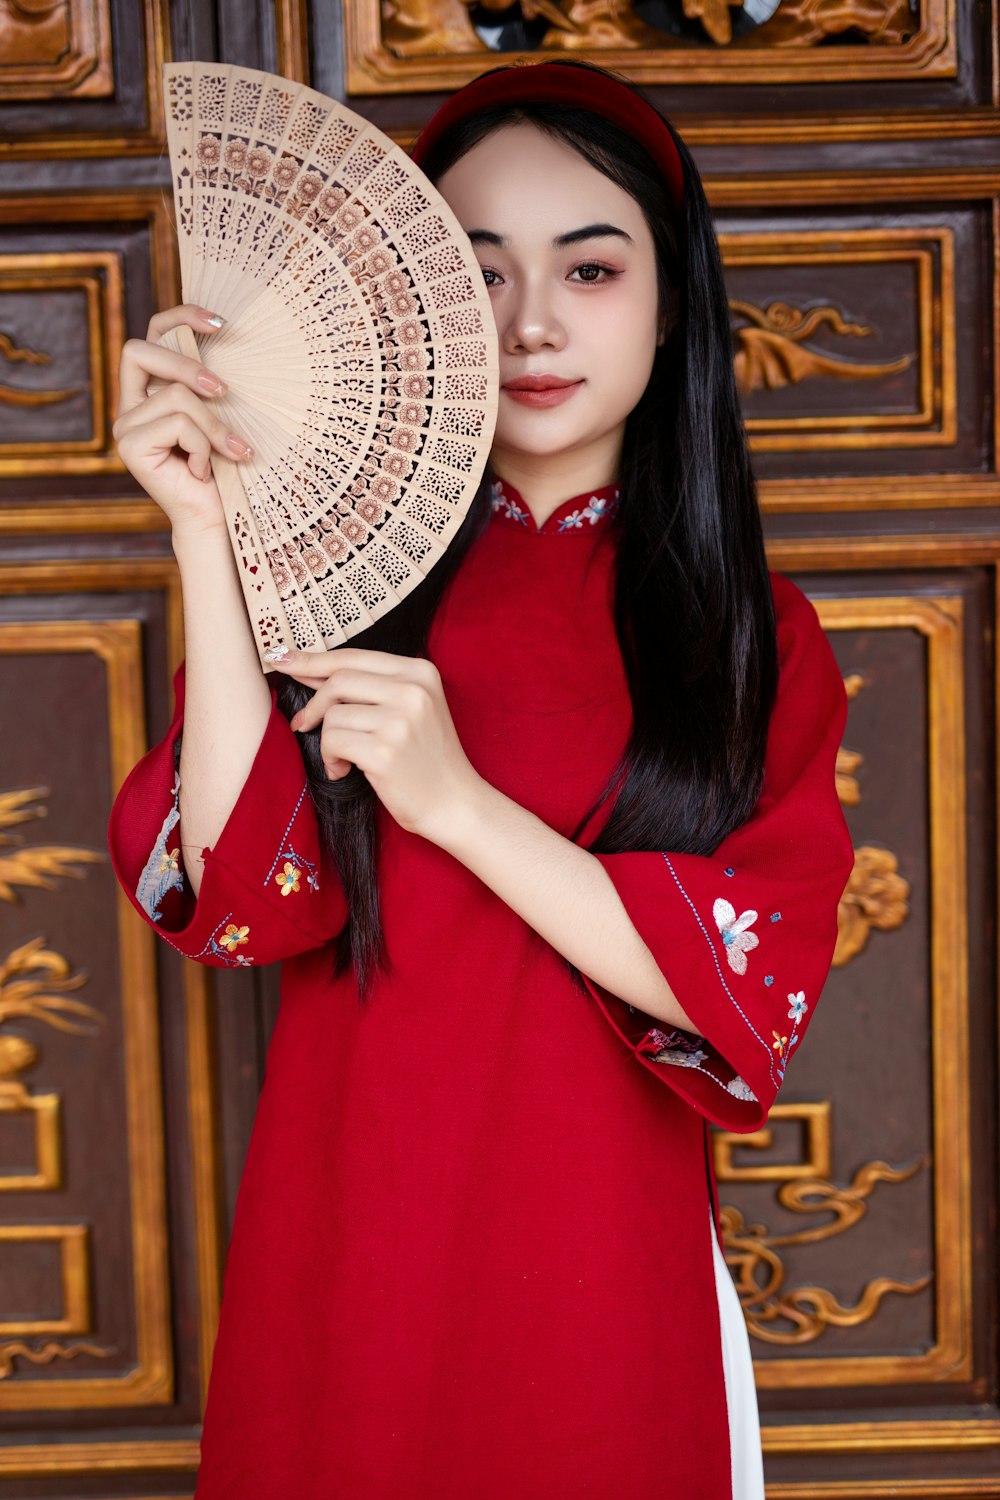 a woman in a red dress holding a fan